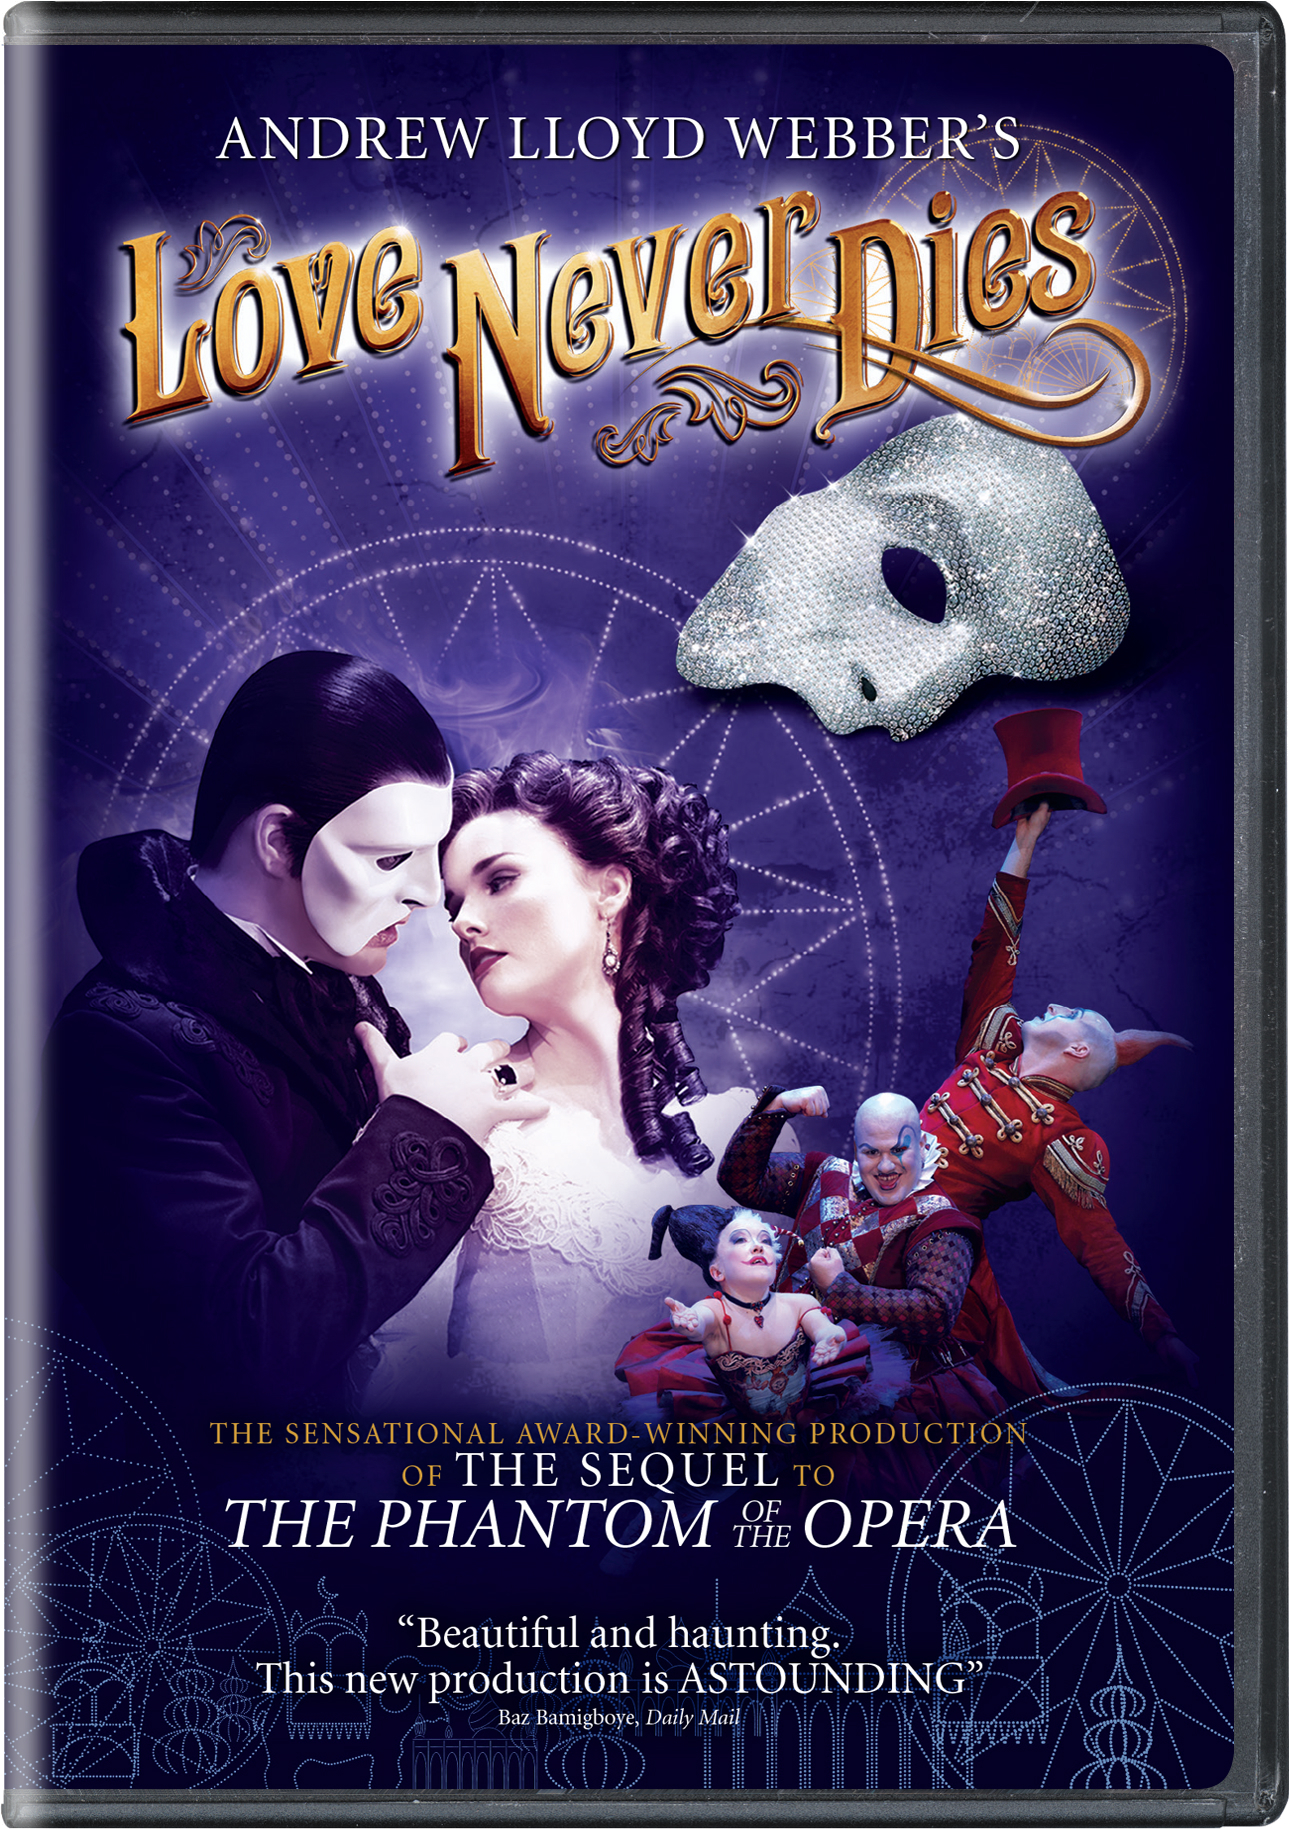 Andrew Lloyd Webber's Love Never Dies - DVD [ 2012 ]  - Stage Musicals Music On DVD